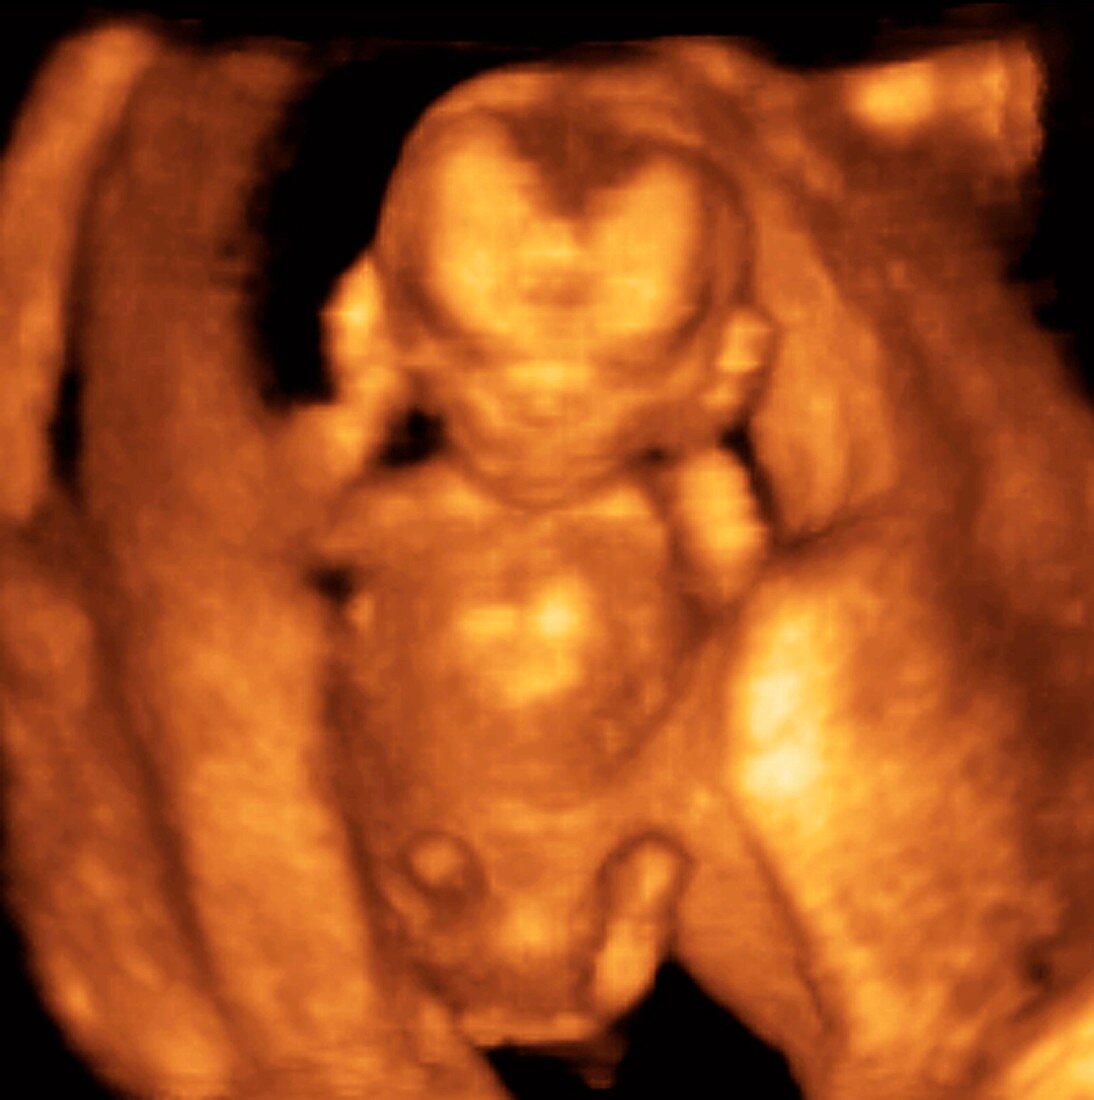 Foetus at 12 weeks,3D ultrasound